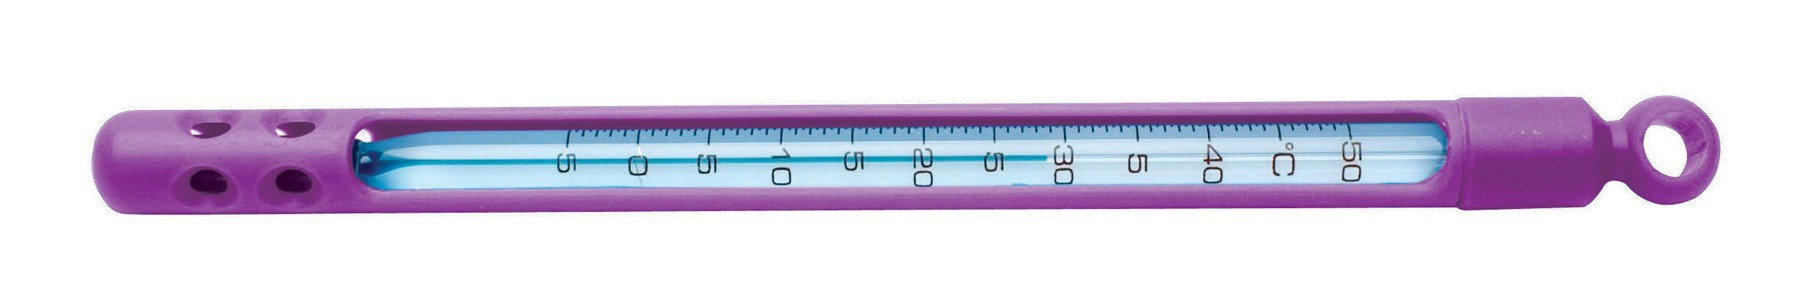 SP Bel-Art, H-B Enviro-Safe Liquid-In-Glass Pocket Laboratory Thermometer; -5 to 50C, Window Plastic Case, Environmentally Friendly